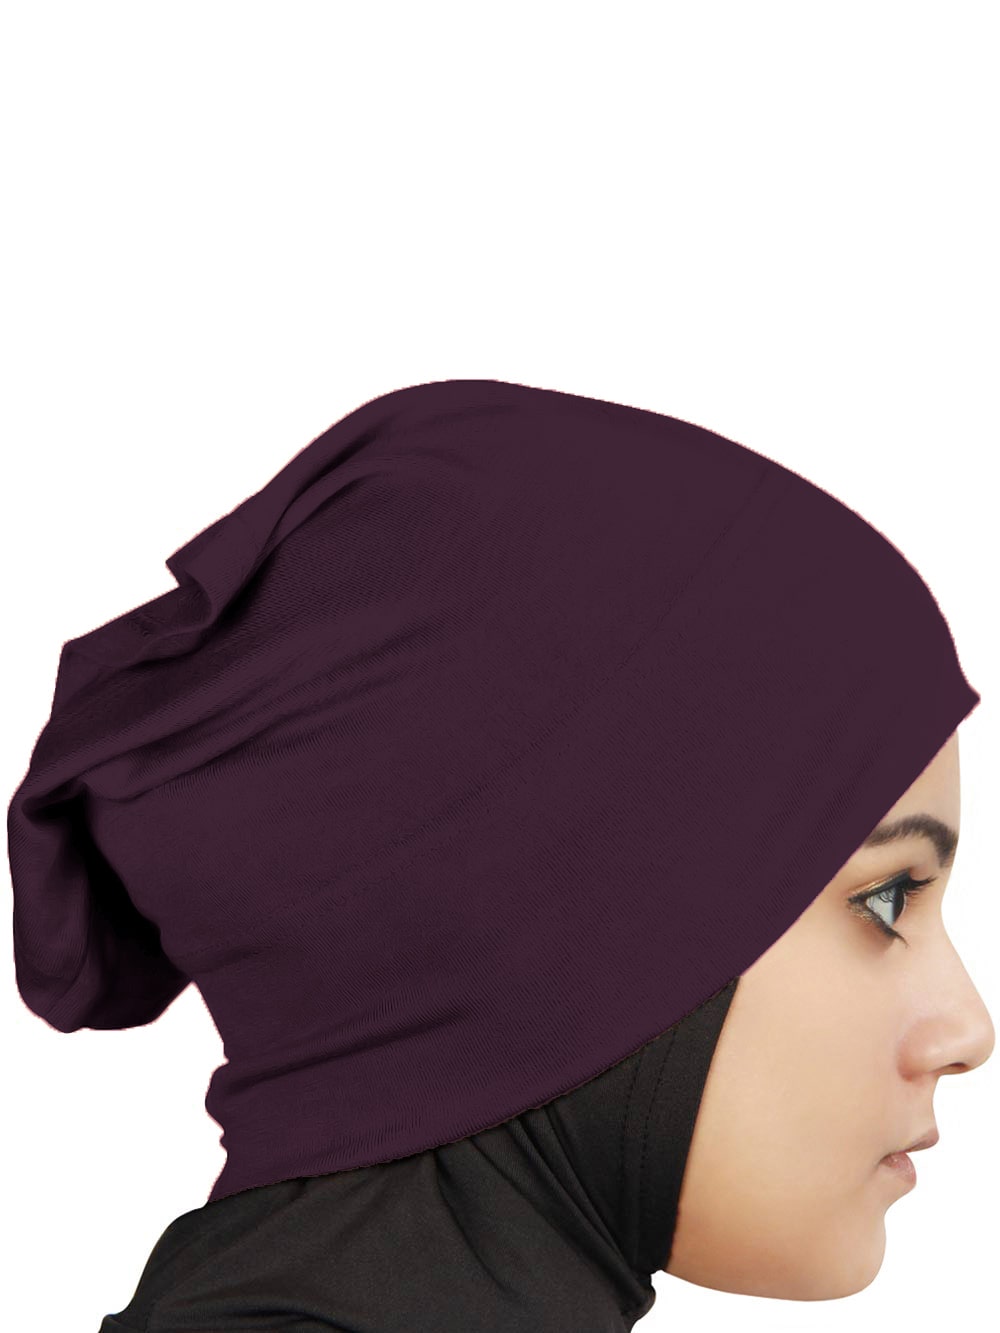 Two Piece Al-Amira Dark Burgundy Viscose Jersey Hijab